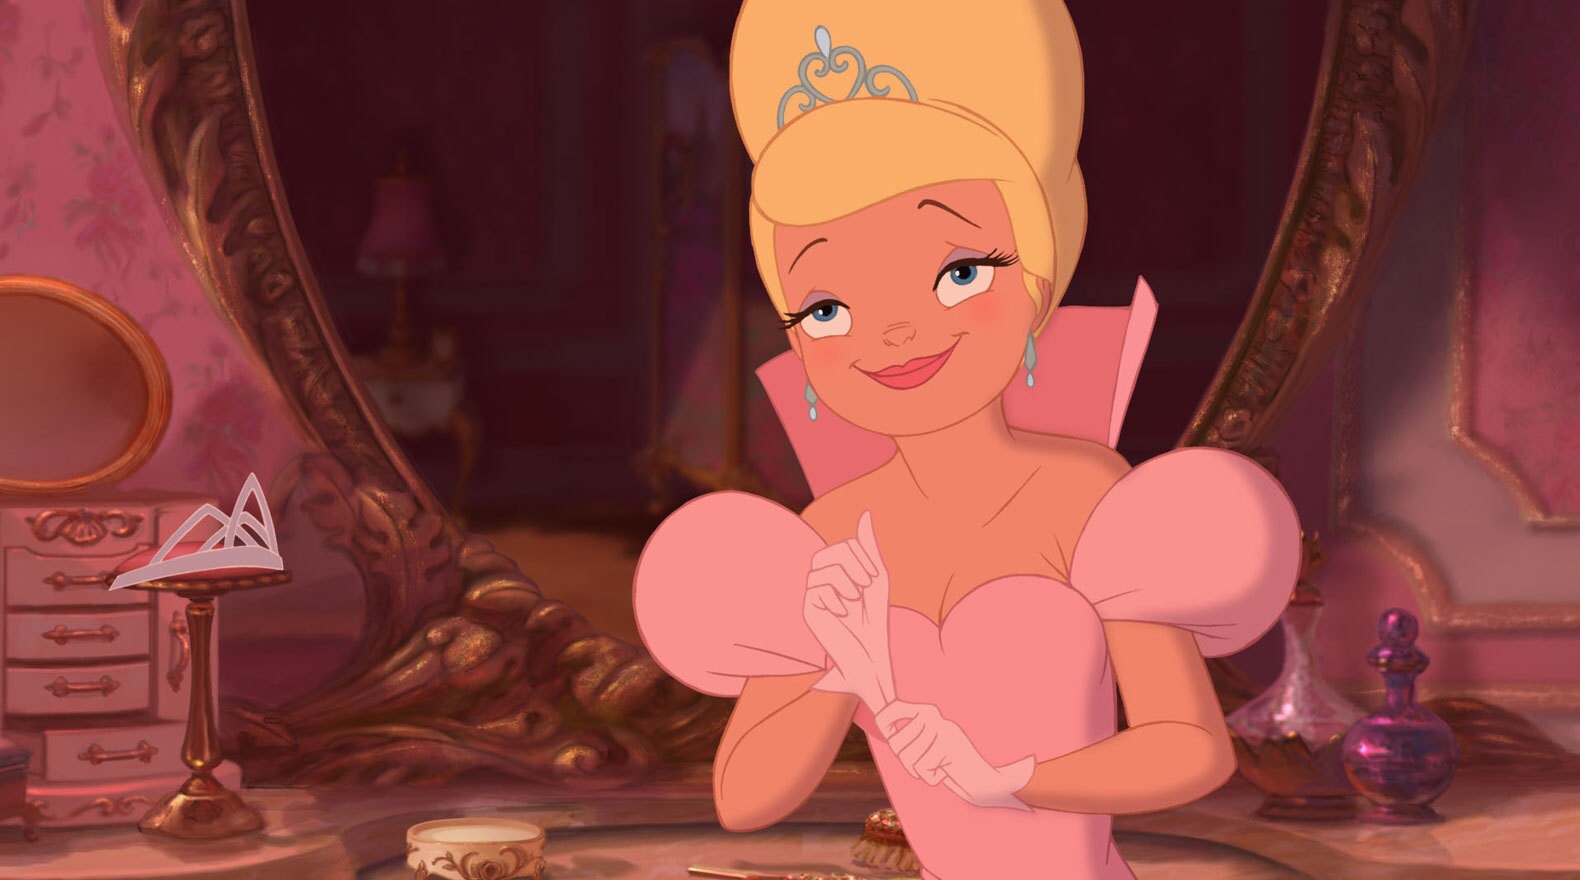 Charlotte La Bouff voiced by Jennifer Cody in a pink dress